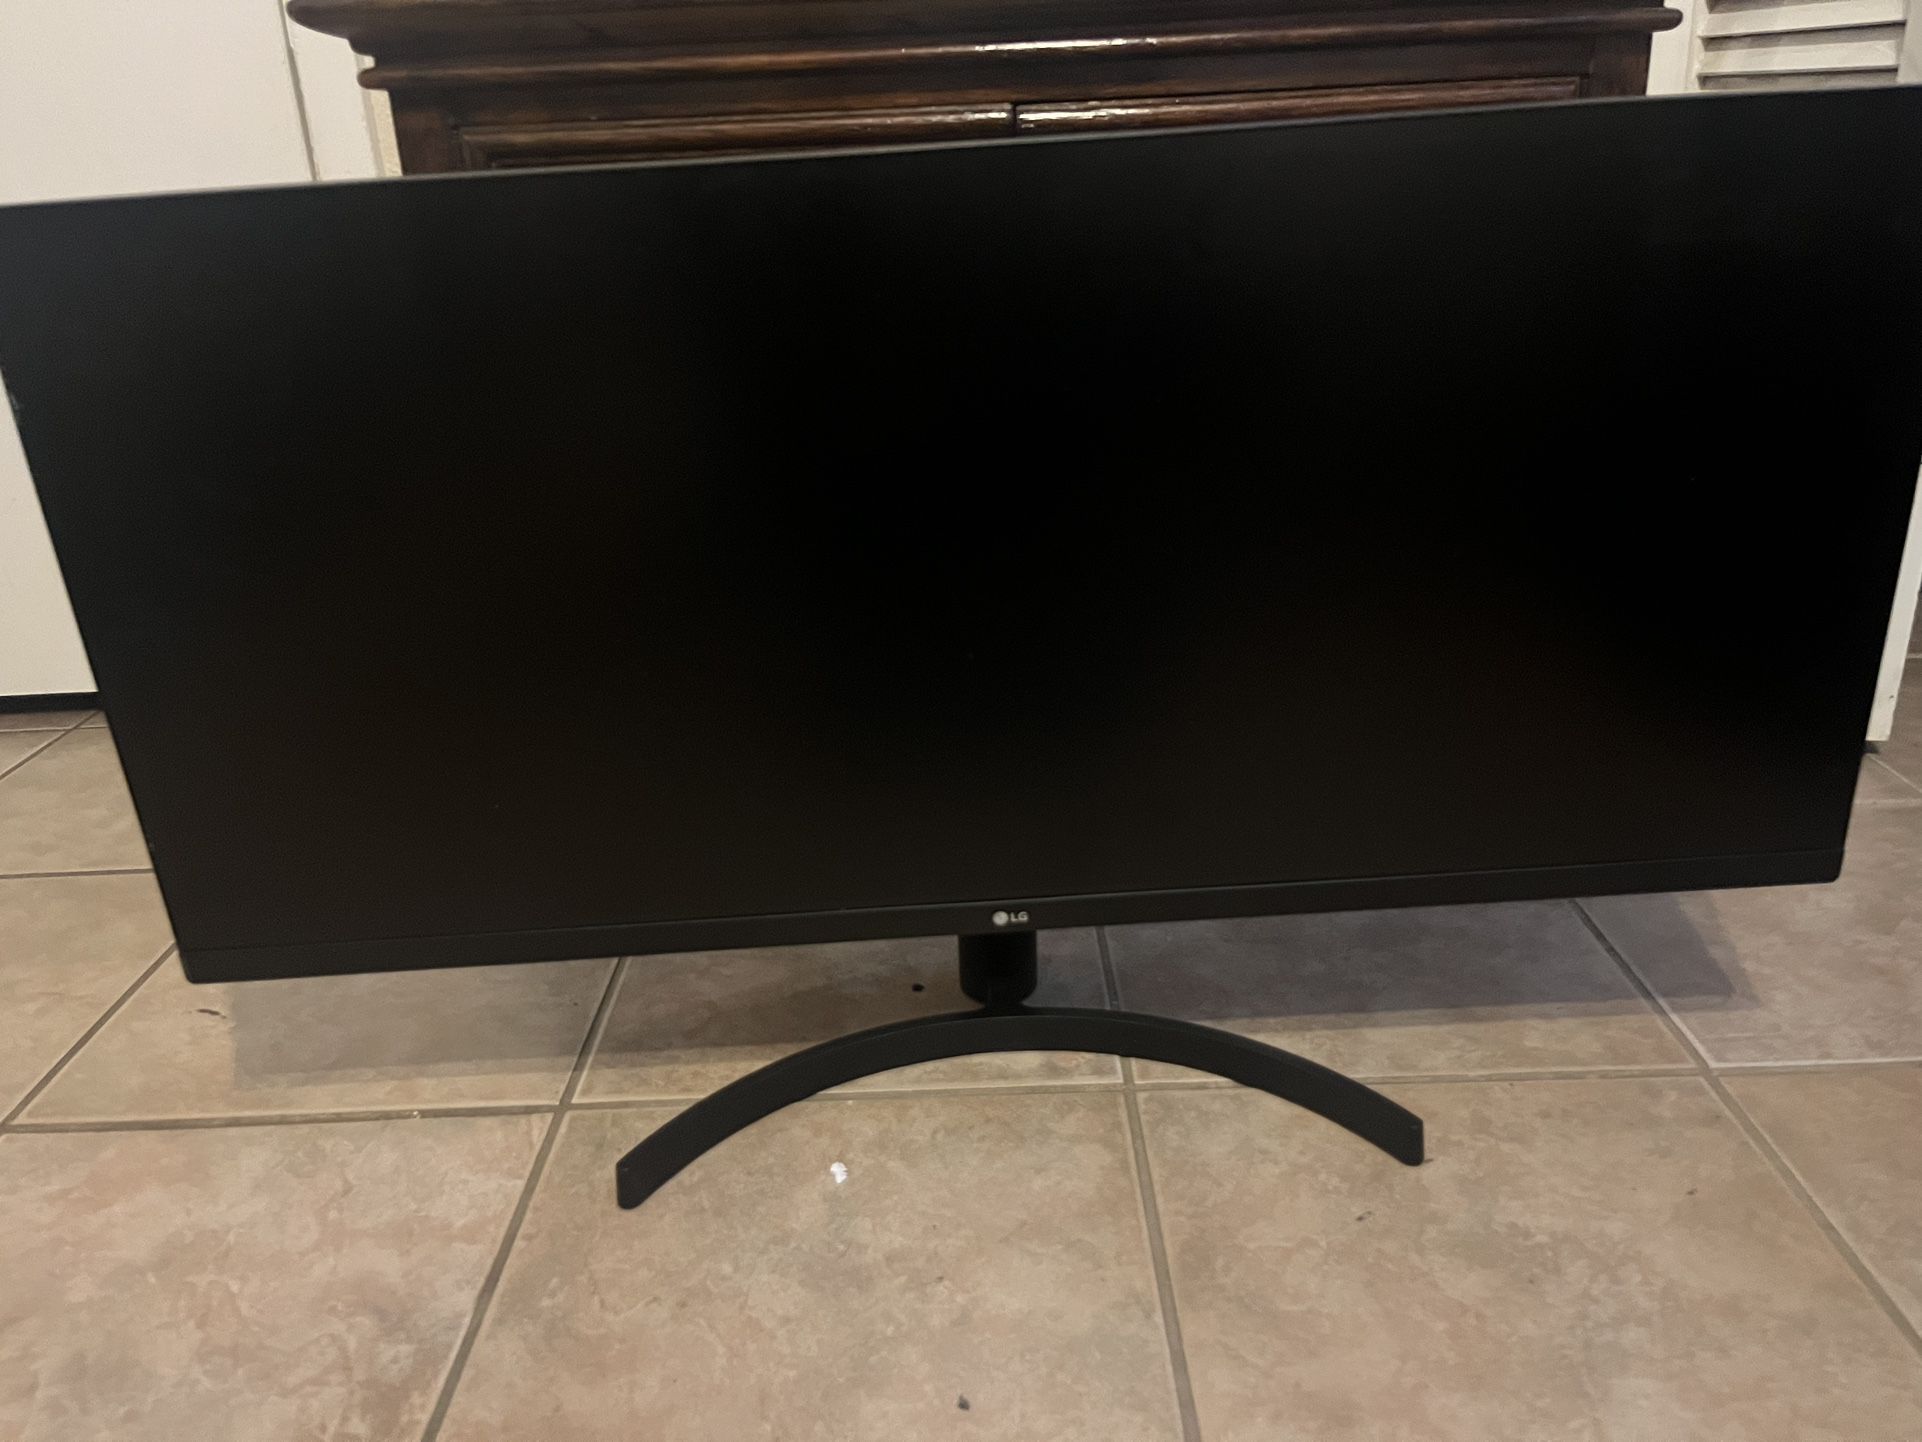 34 inch 4k lg monitor